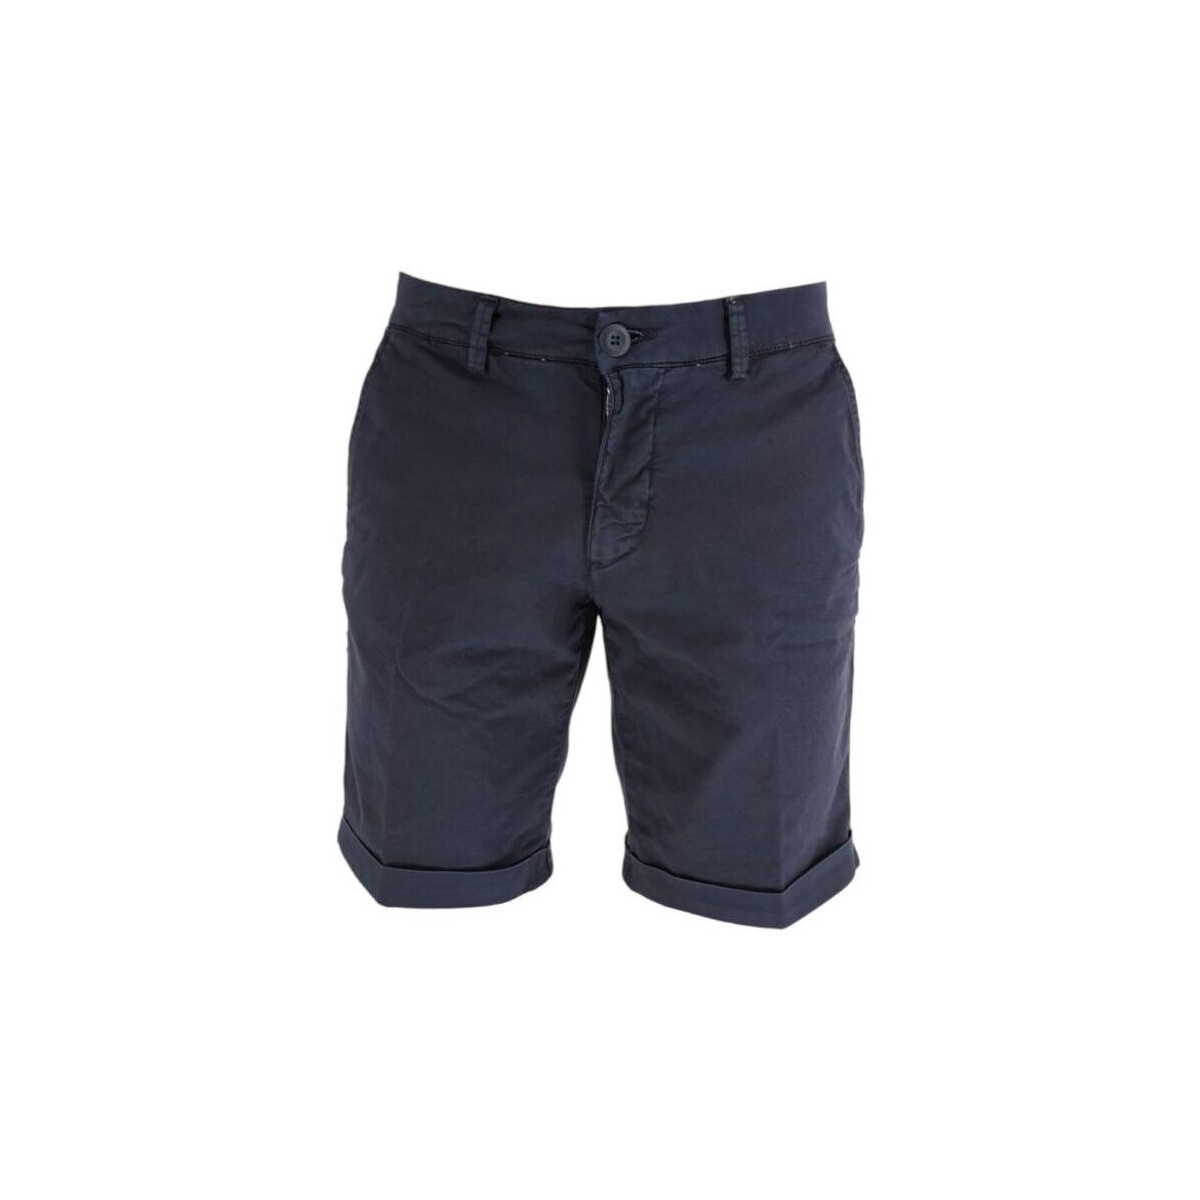 Abbigliamento Uomo Shorts / Bermuda Modfitters Pantaloncini Brighton Uomo Dark Navy Blu